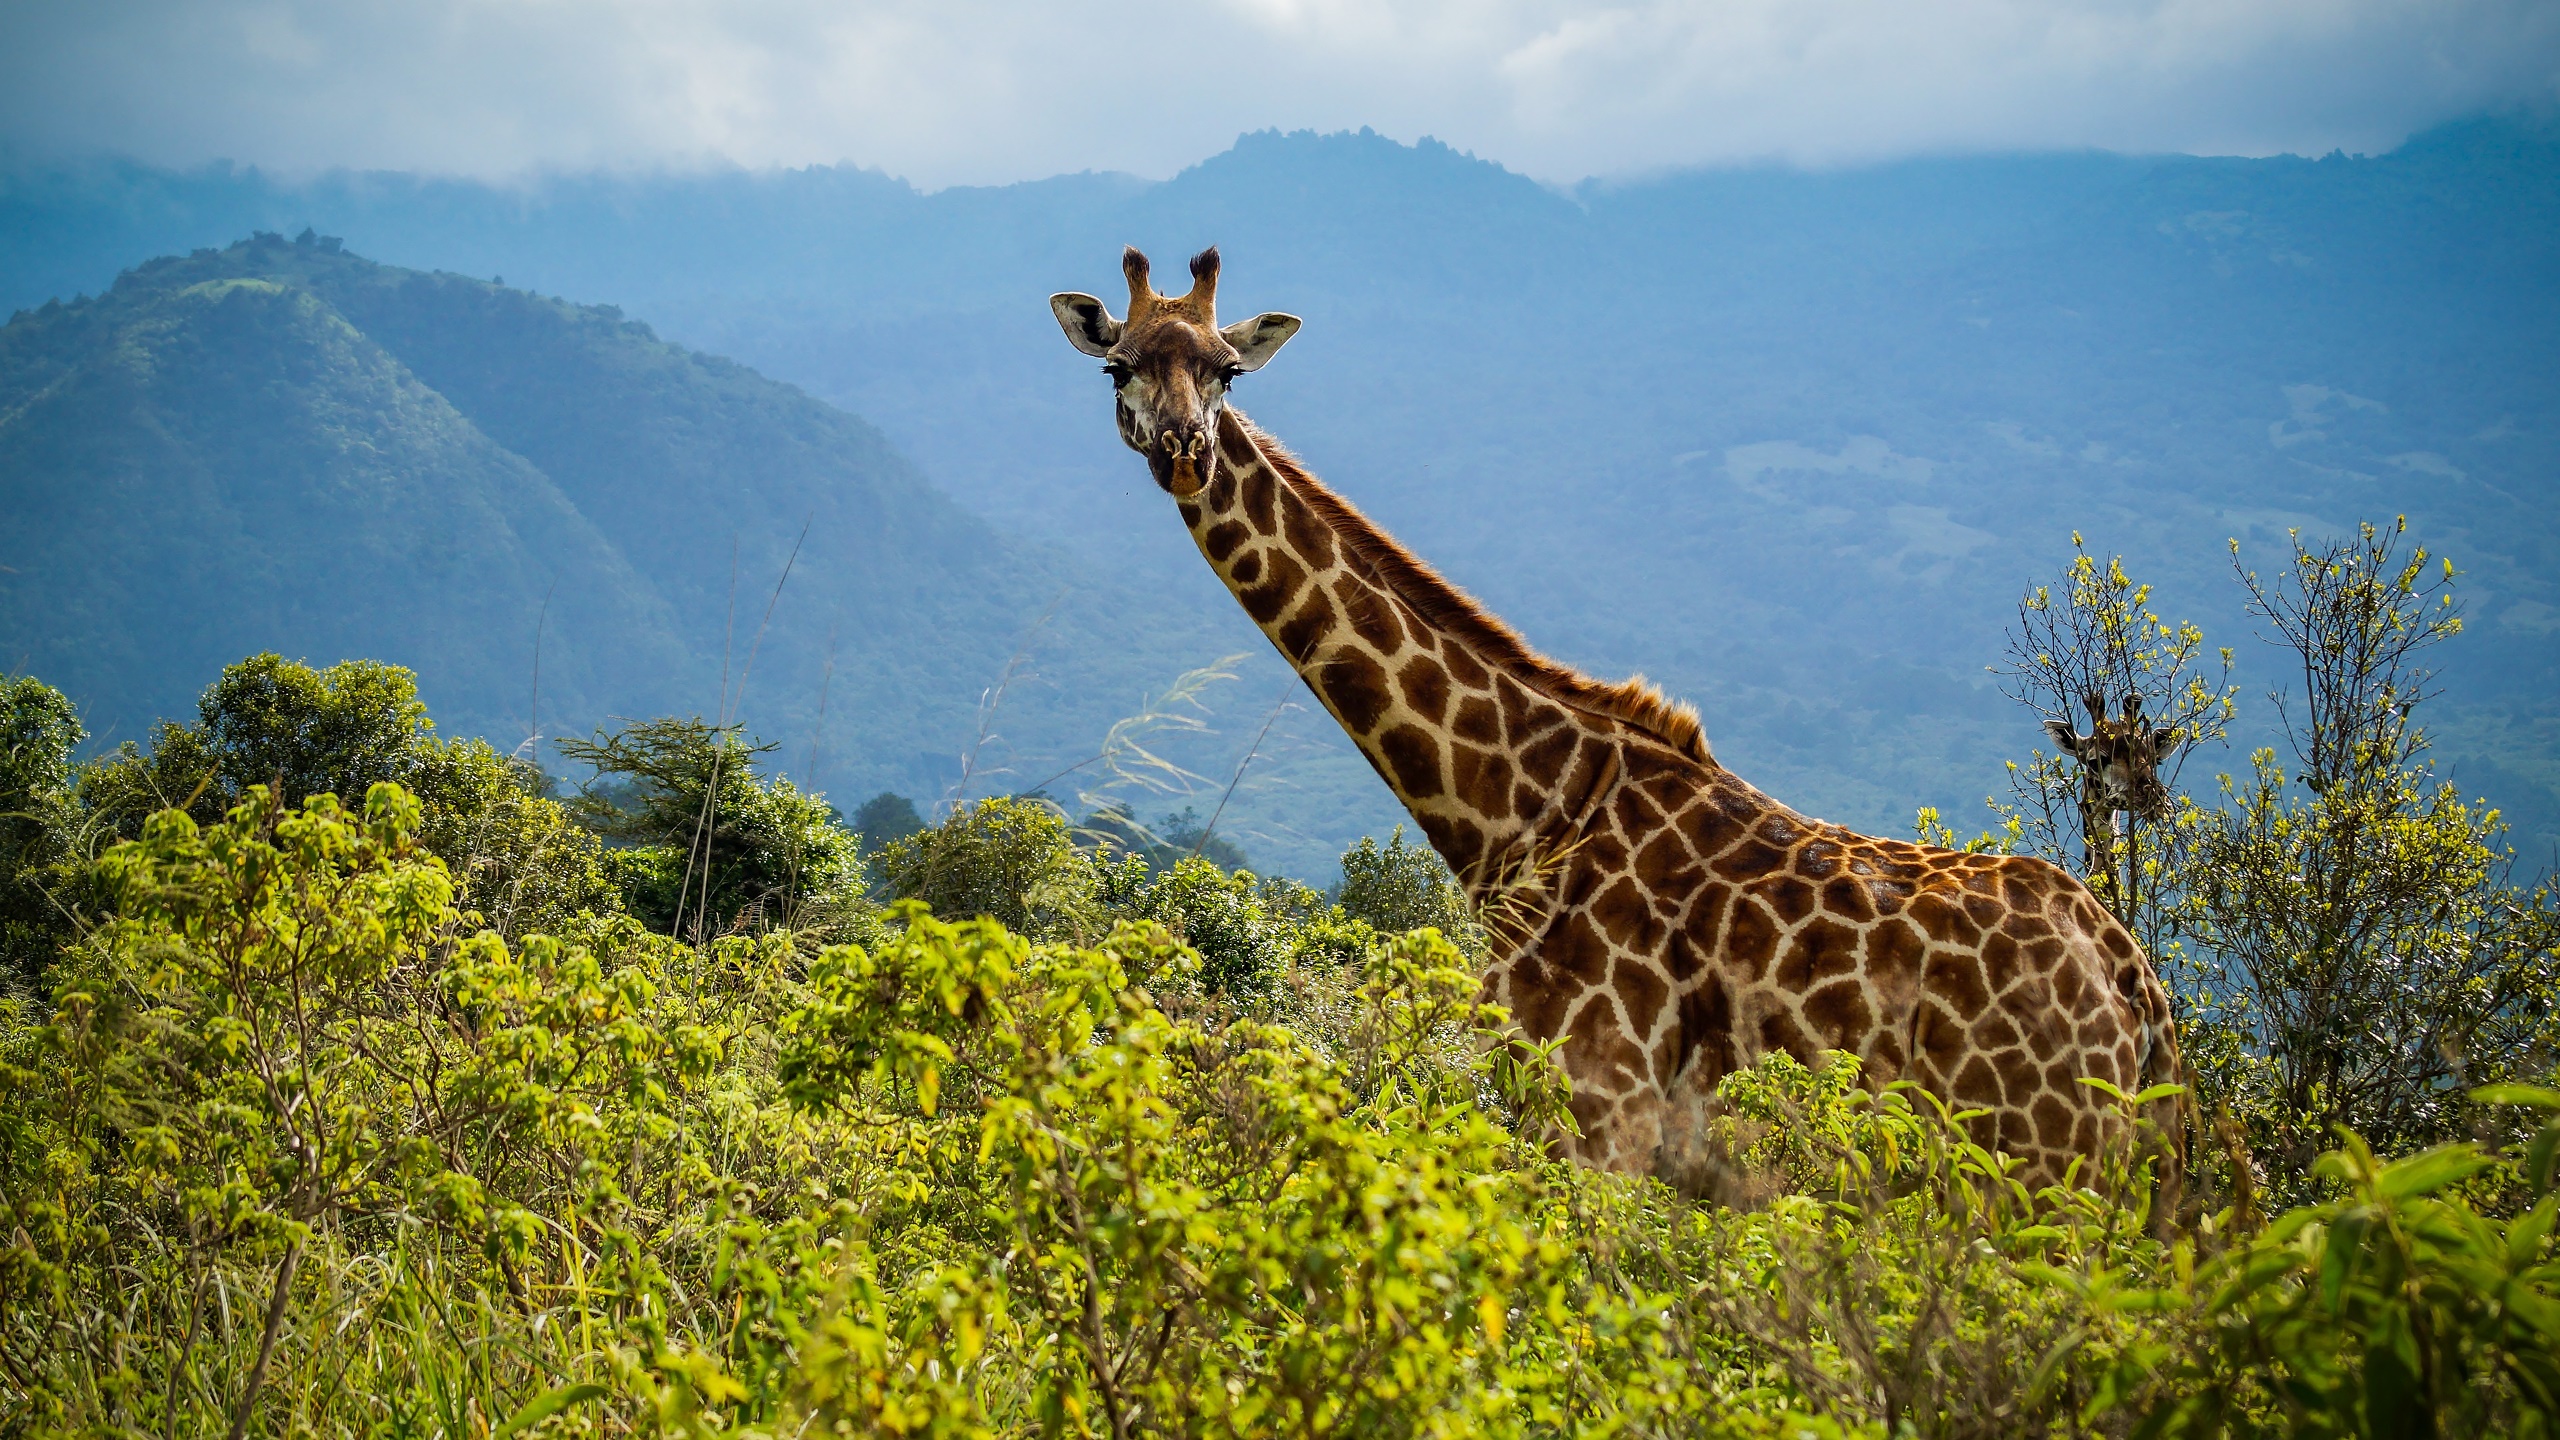 General 2560x1440 nature giraffes animals mammals